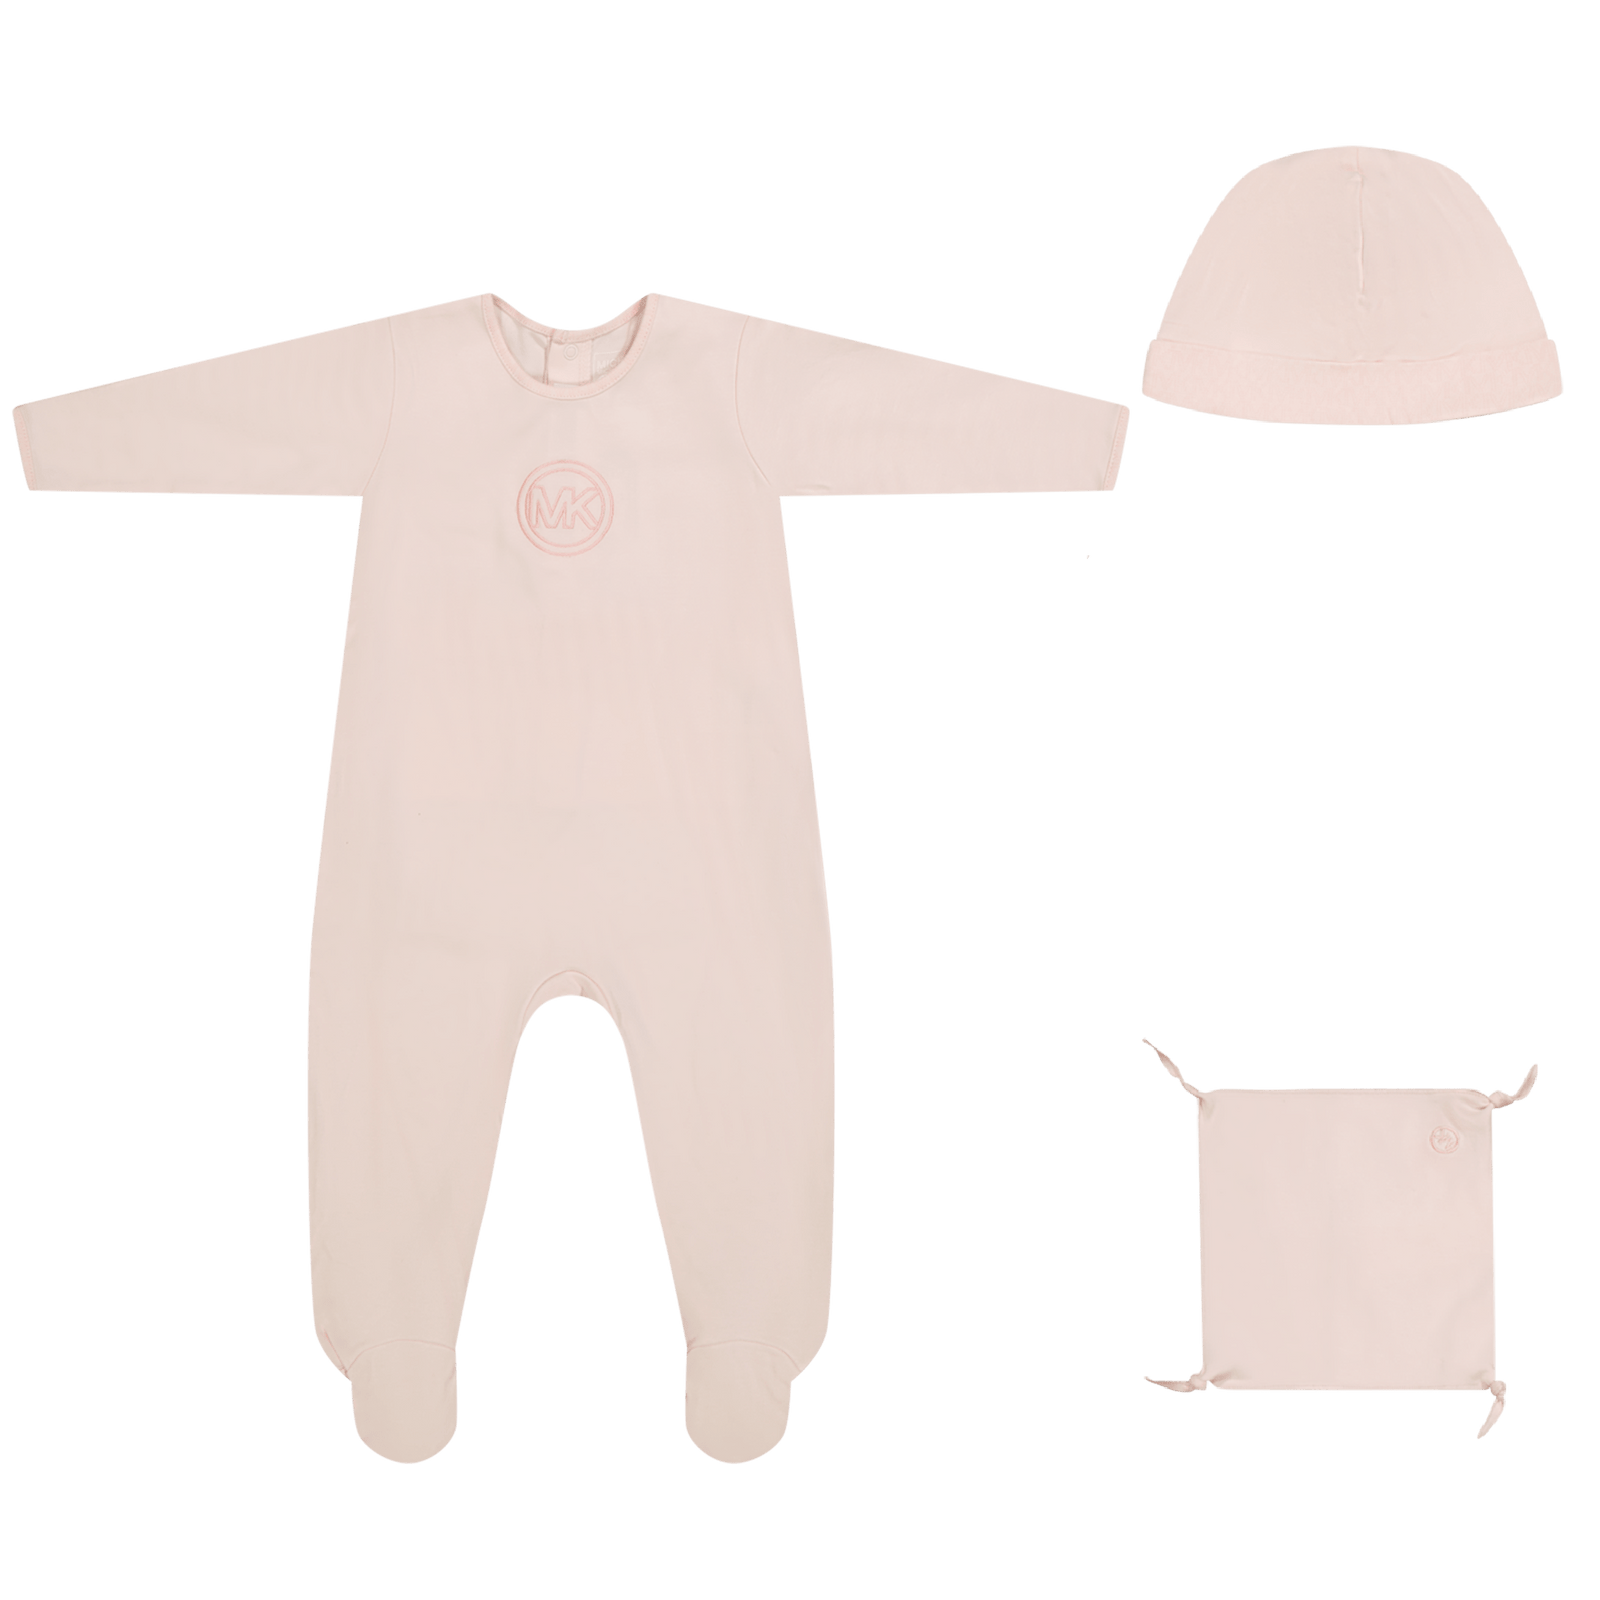 Michael Kors Baby Girls Bodysuit Light Pink